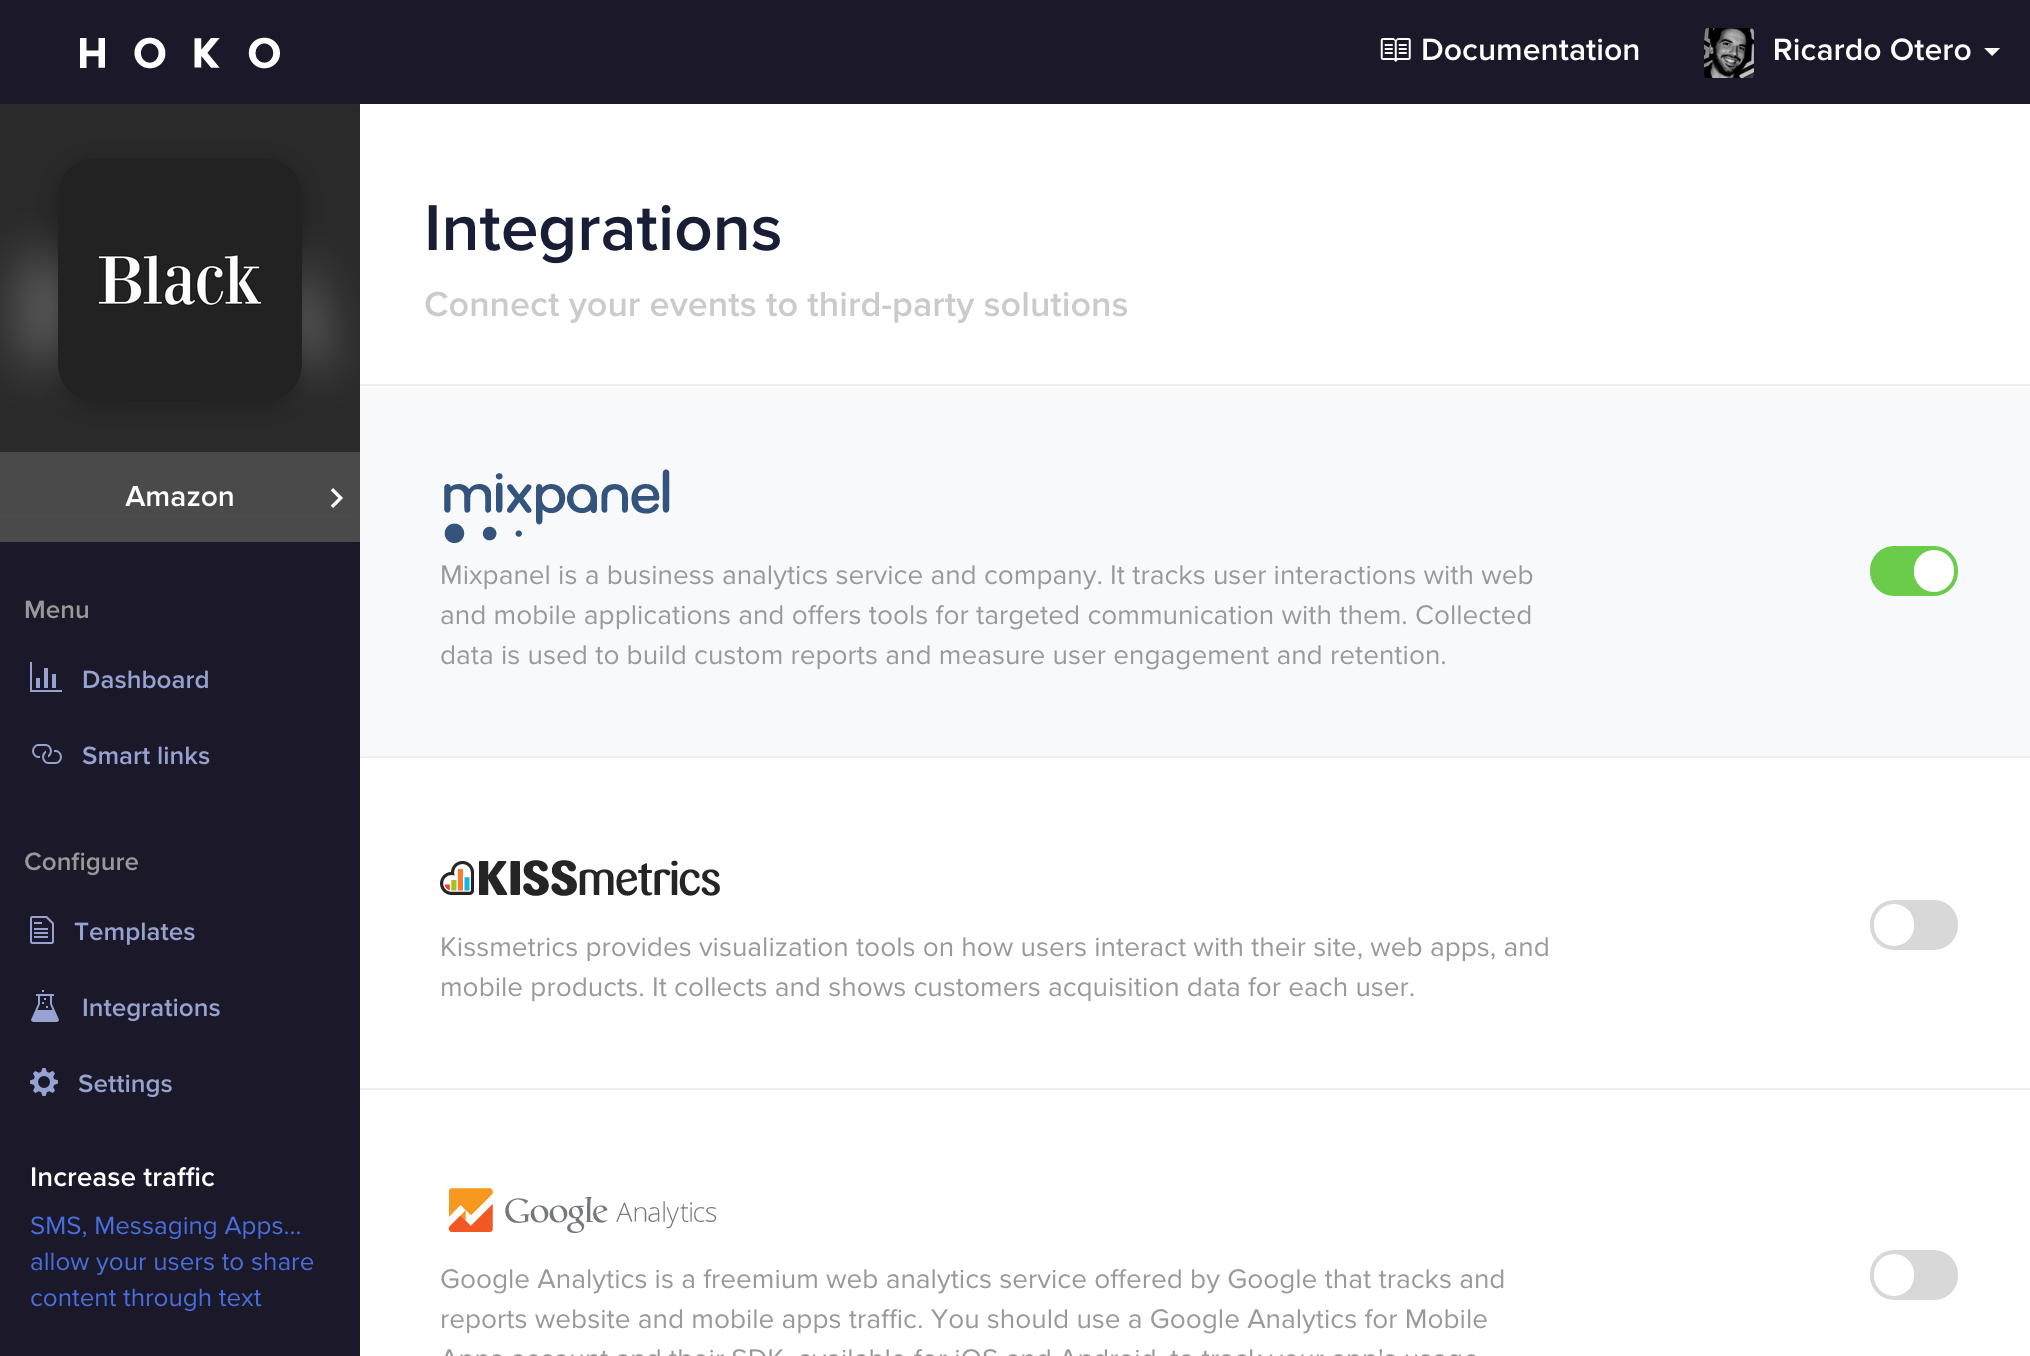 List of integrations